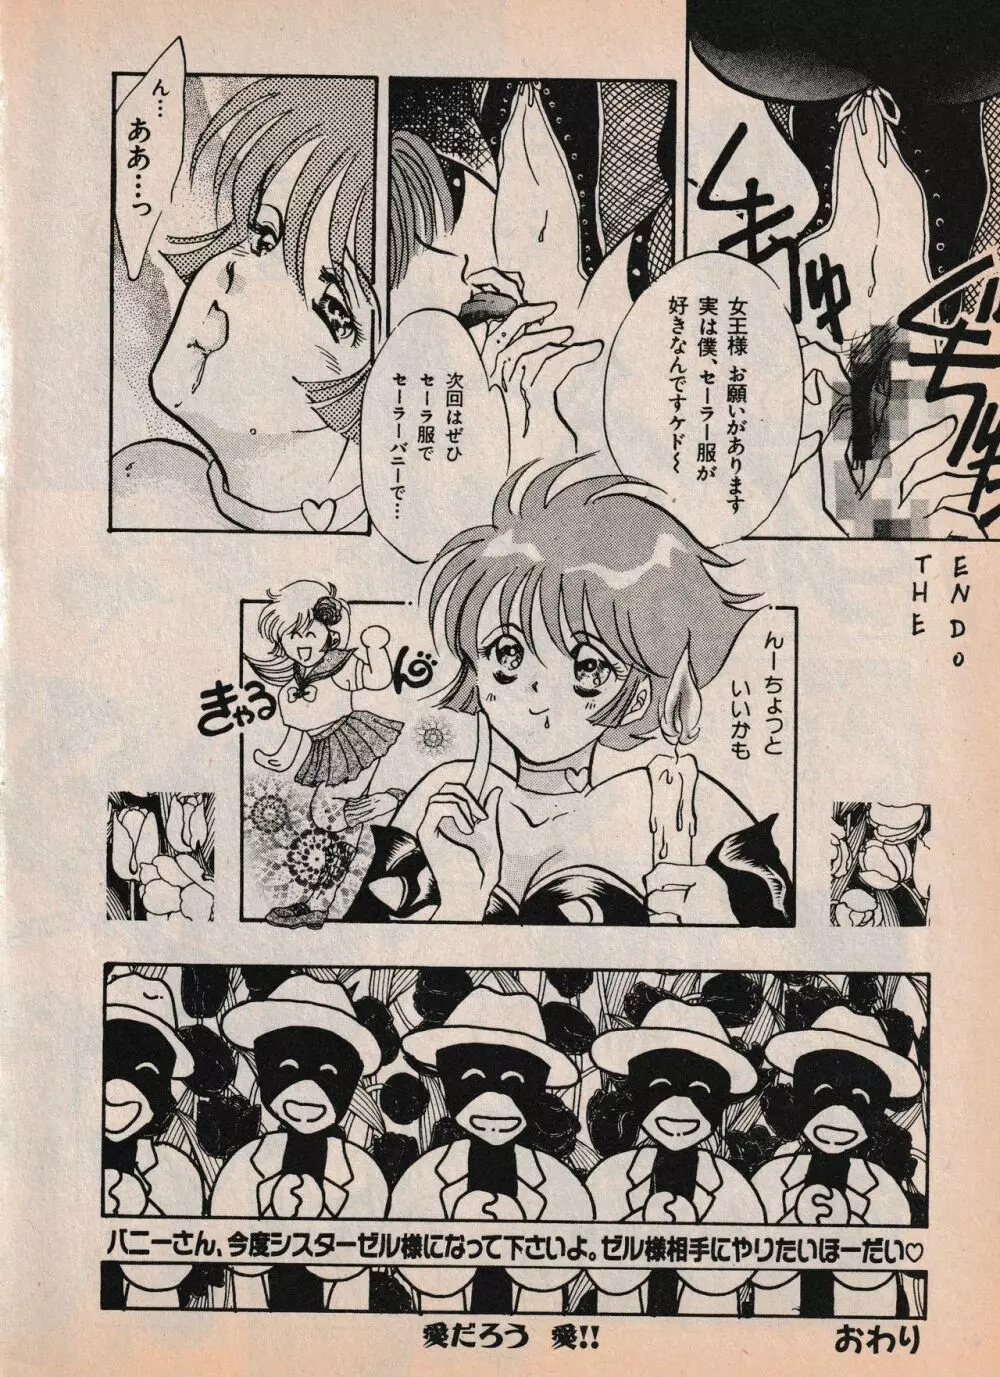 Sailor X vol. 4 - Sailor X vs. Cunty Horny! - page79